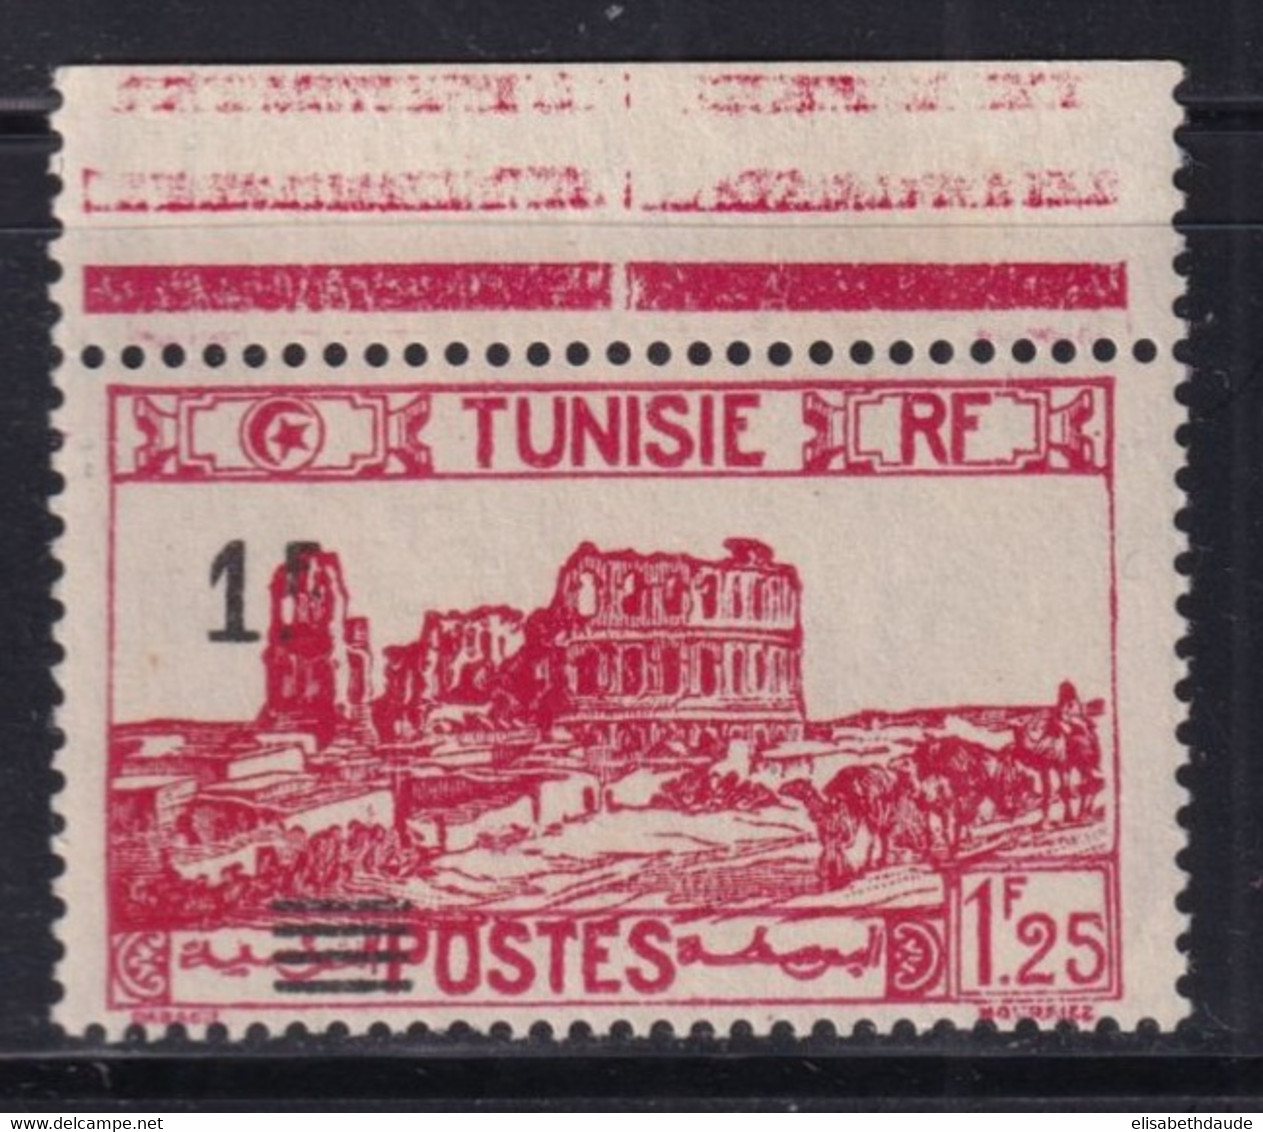 TUNISIE - 1940 - YVERT N° 224a VARIETE SURCHARGE à DEPLACEE à GAUCHE ** MNH - COTE = 50 EUR. - Neufs